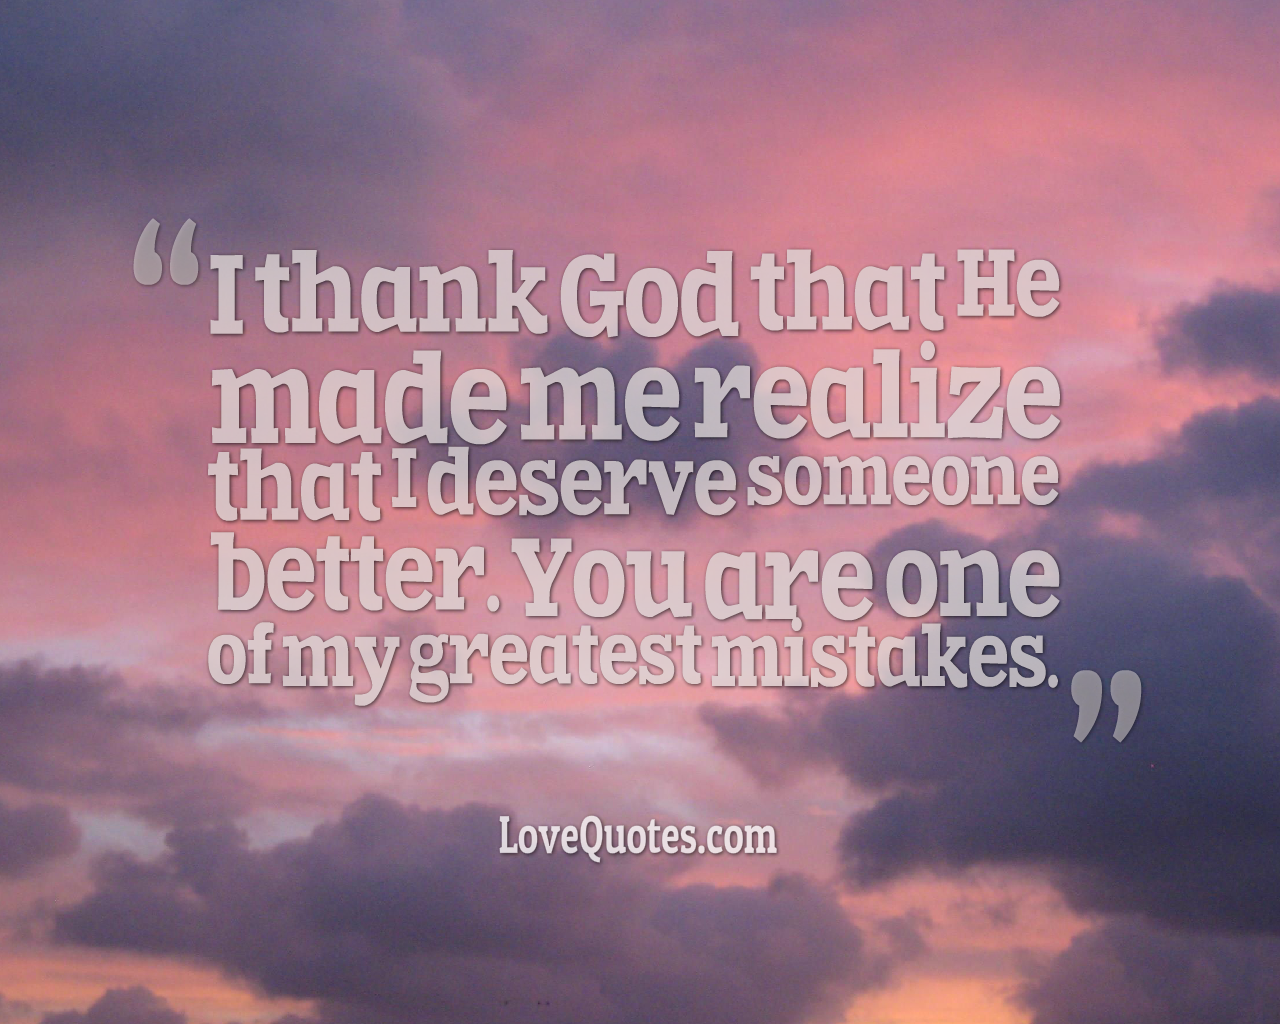 My Greatest Mistakes